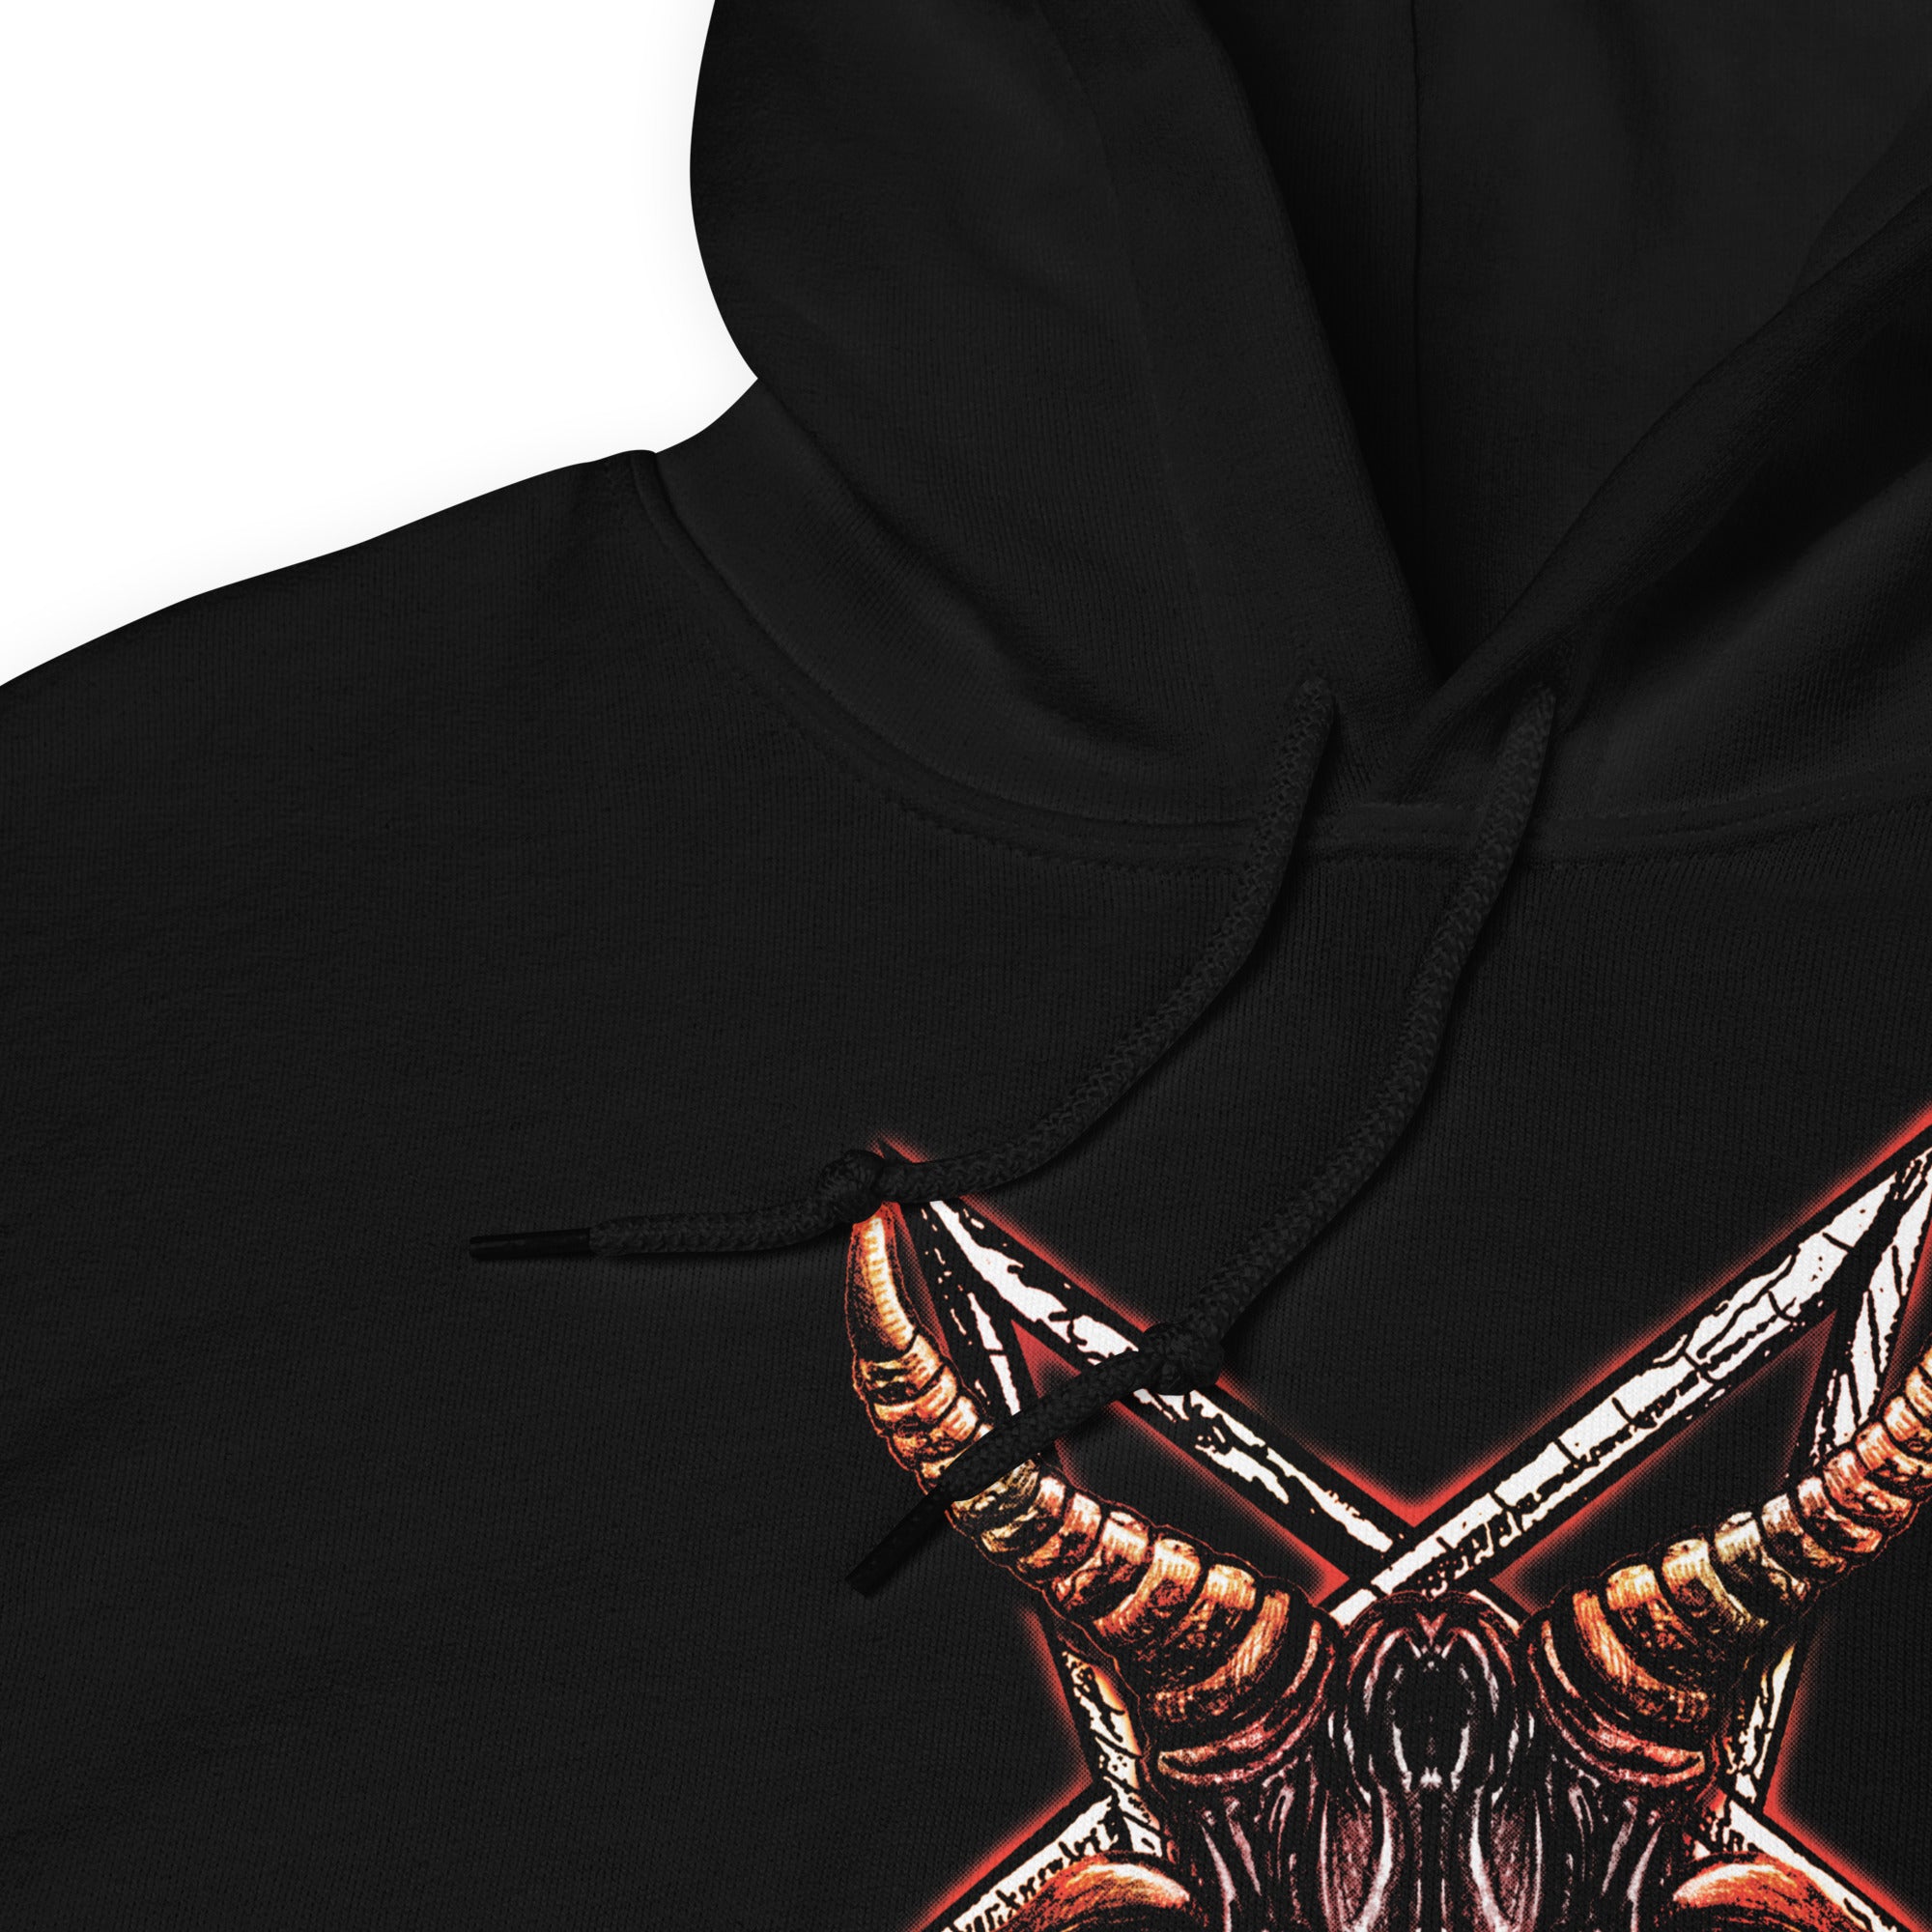 Goat Head Baphomet Inverted Pentagram Satanic Unisex Hoodie Sweatshirt - Edge of Life Designs